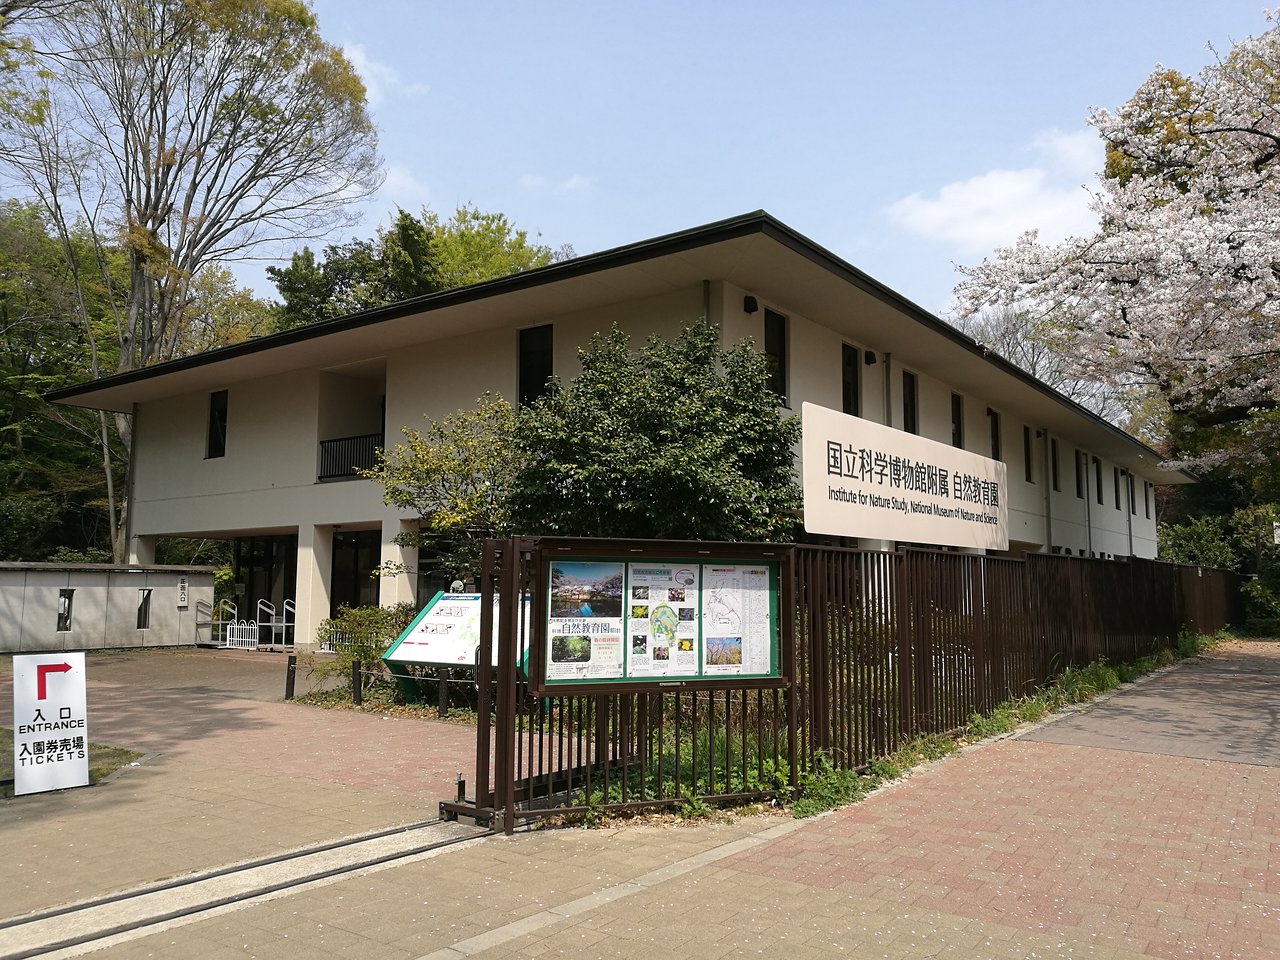 Japanischer Garten Düsseldorf Neu Institute Of Nature Study Shirokanedai 2020 All You Need